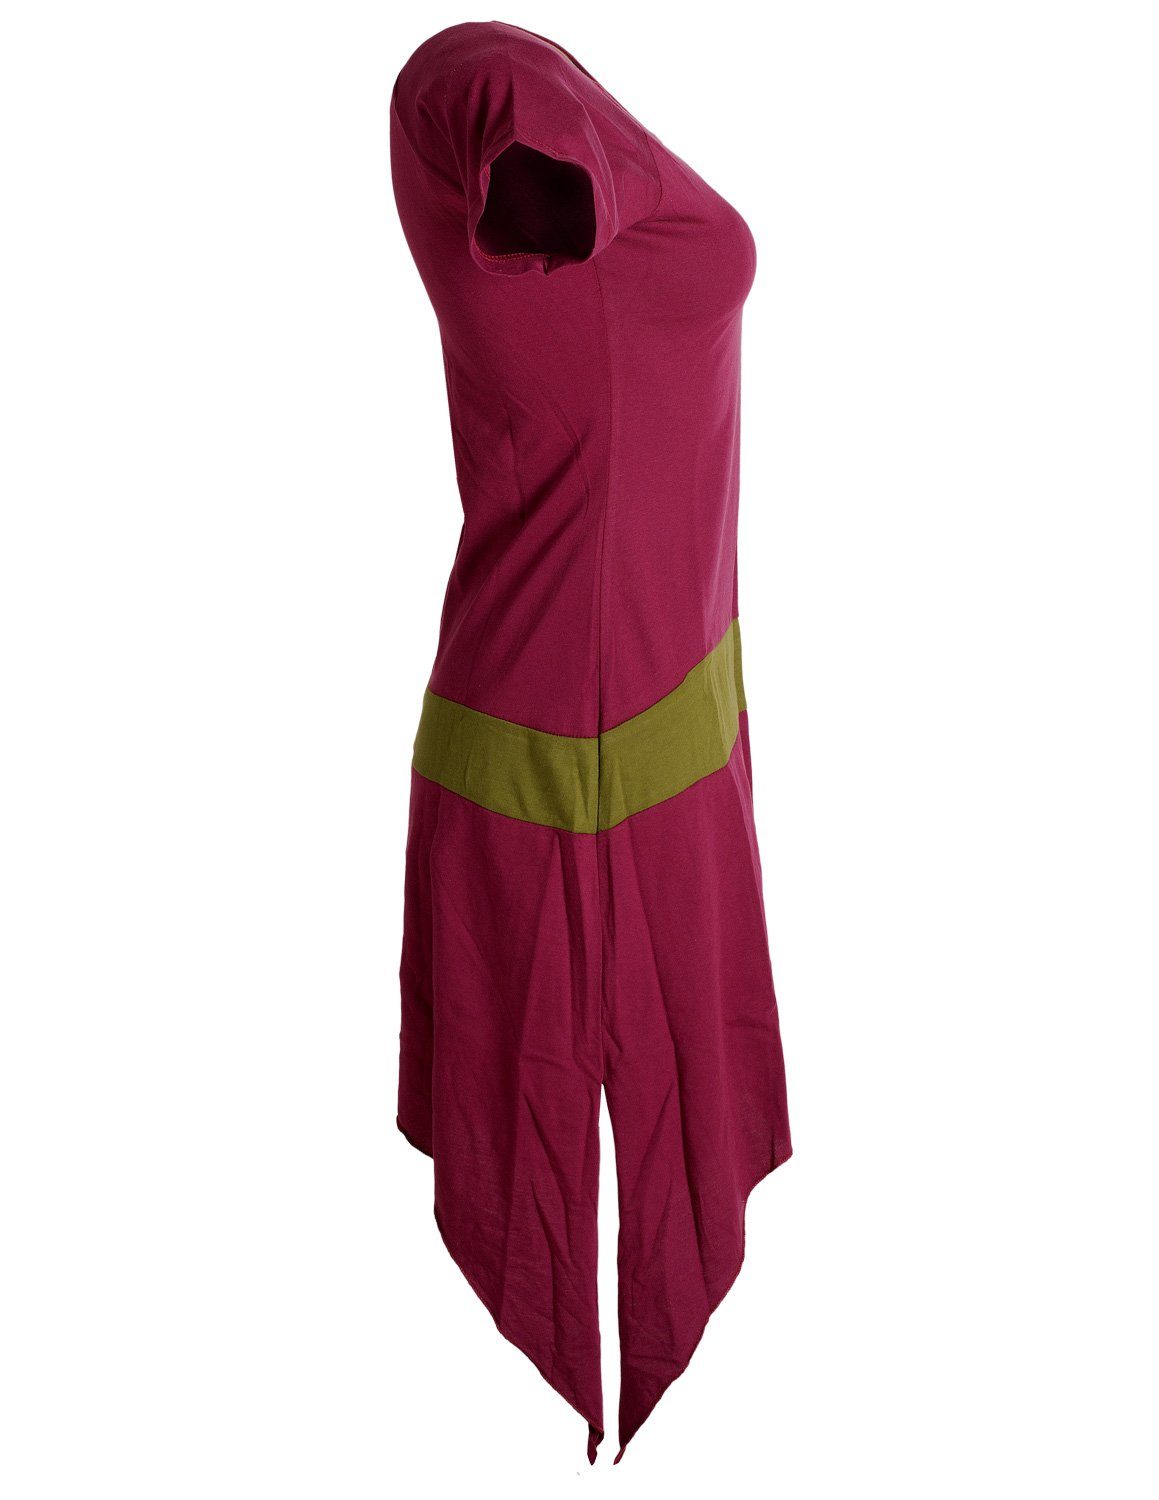 Einfaches Tunika, Vishes Zipfelkleid Hippie Longshirt, dunkelrot kurzärmliges Baumwolle aus Style Sommerkleid